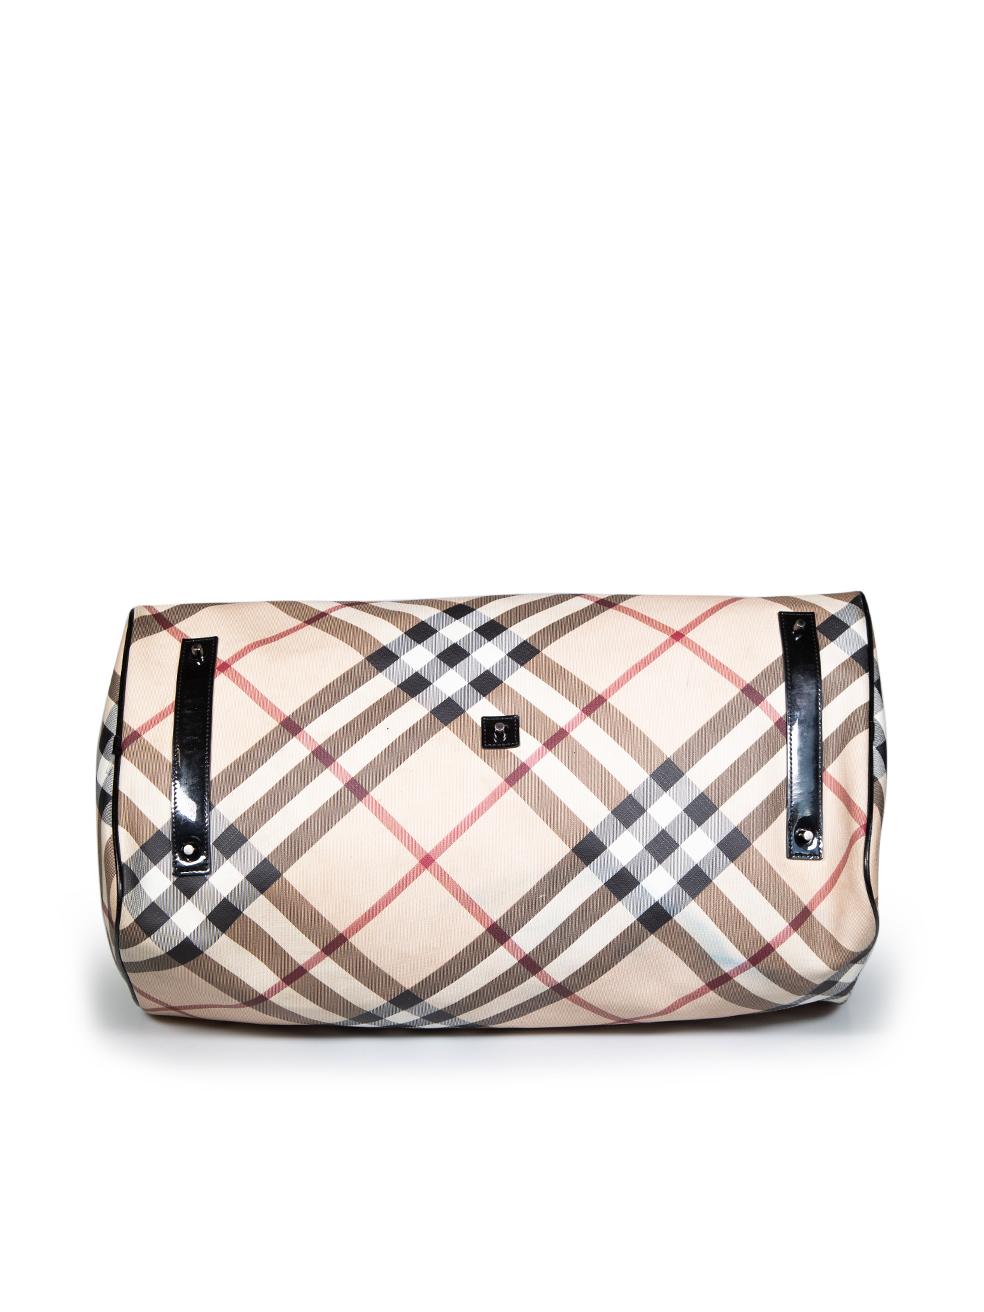 Women's Burberry Beige Nova Check Duffle Bag For Sale